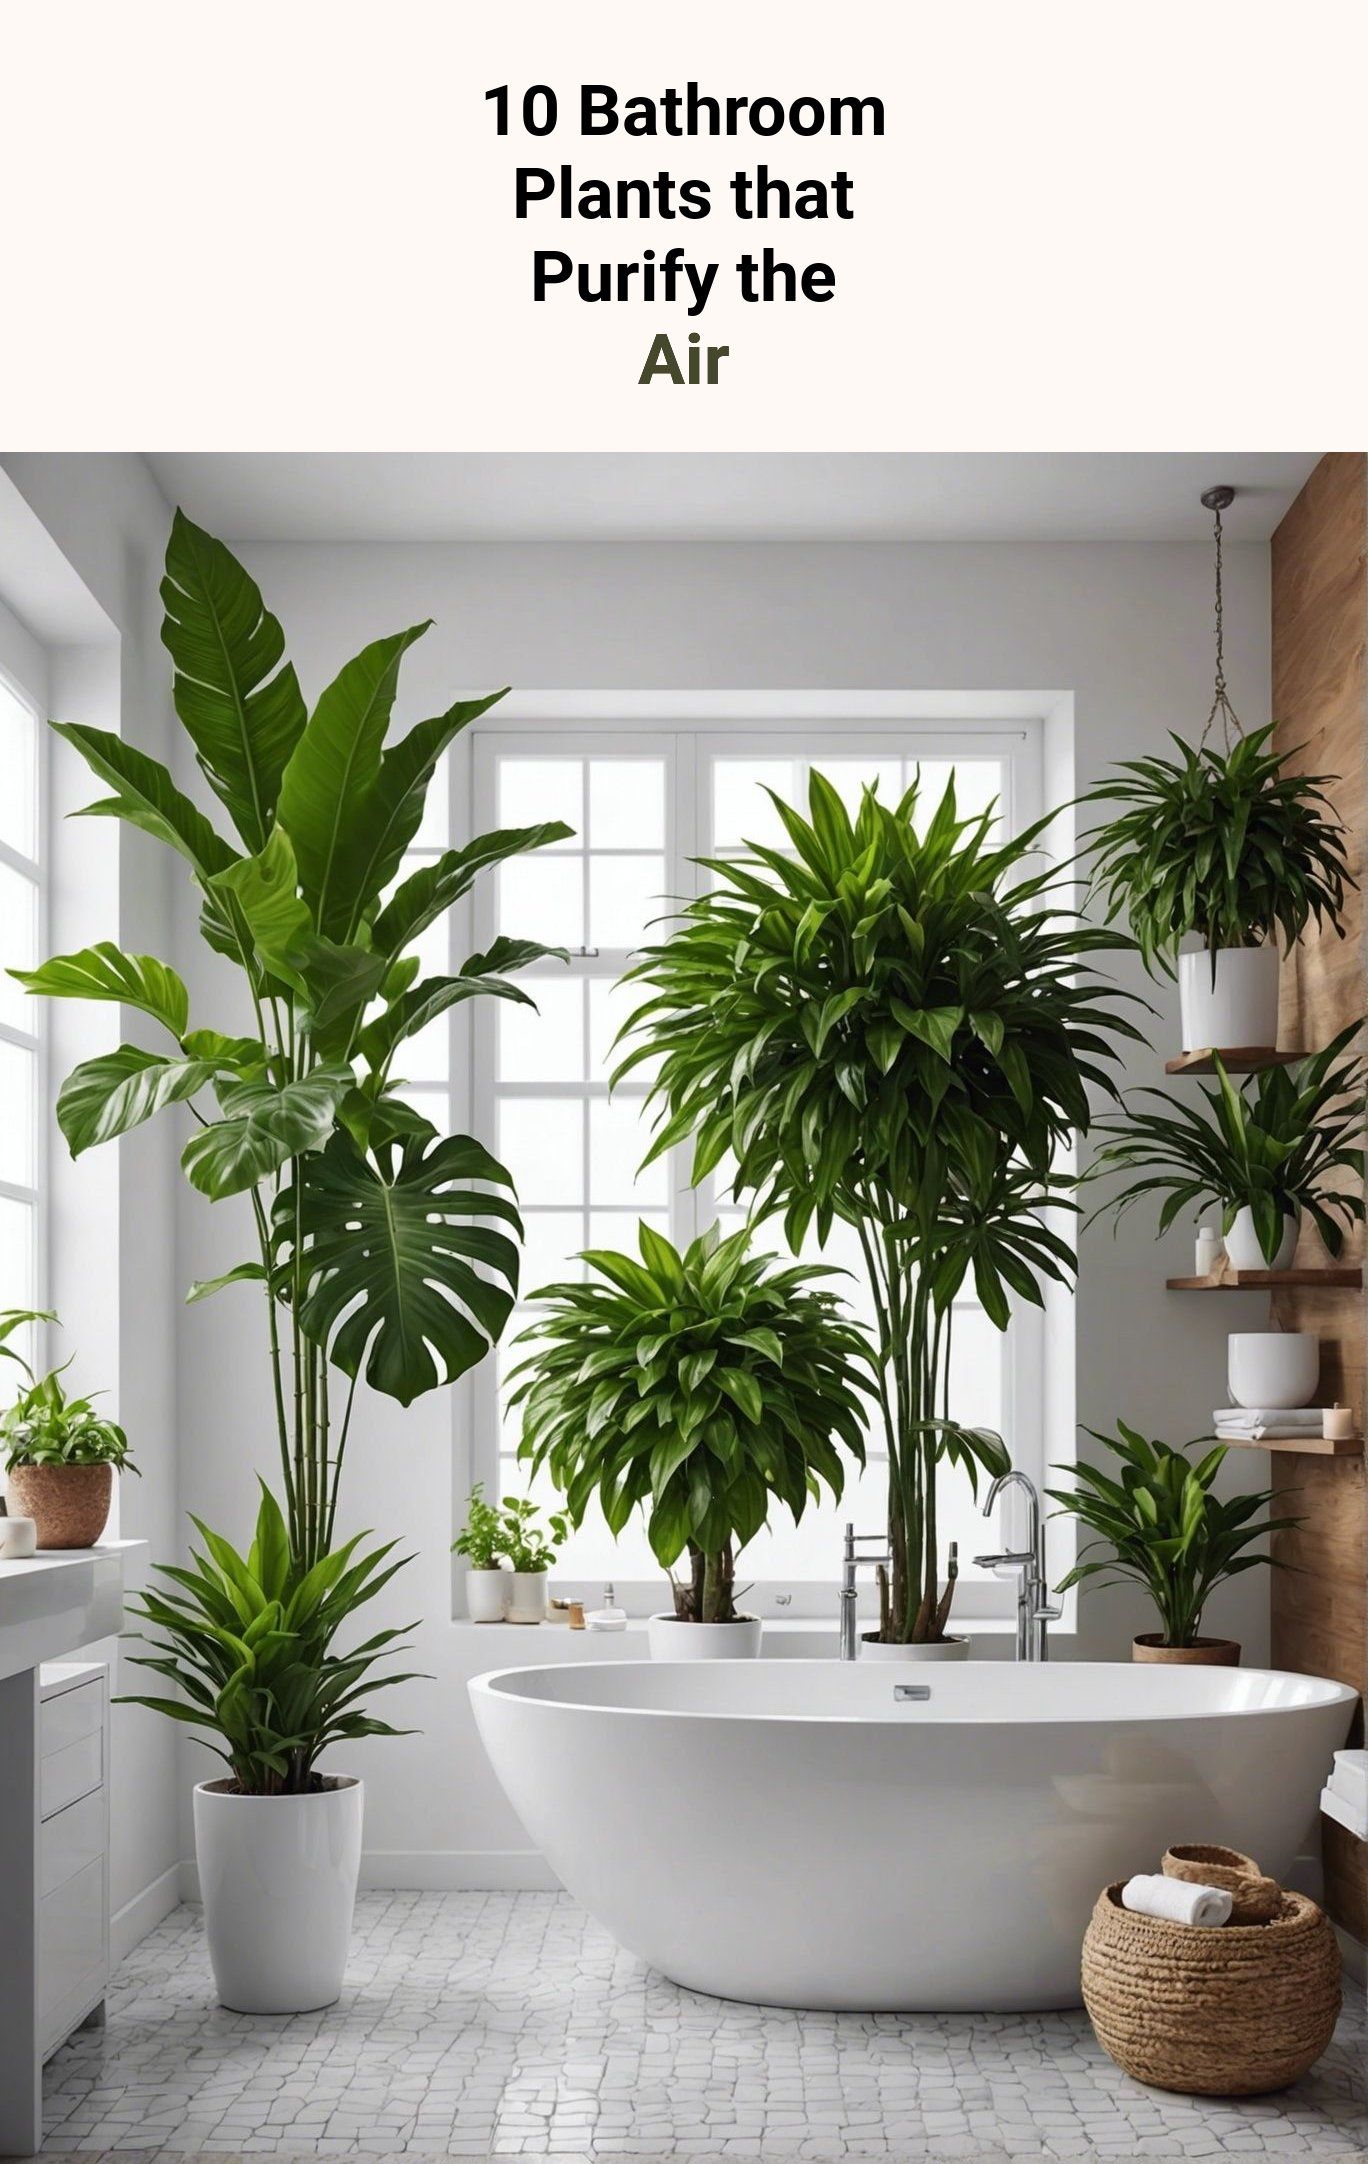 10 Bathroom Plants that Purify the Air